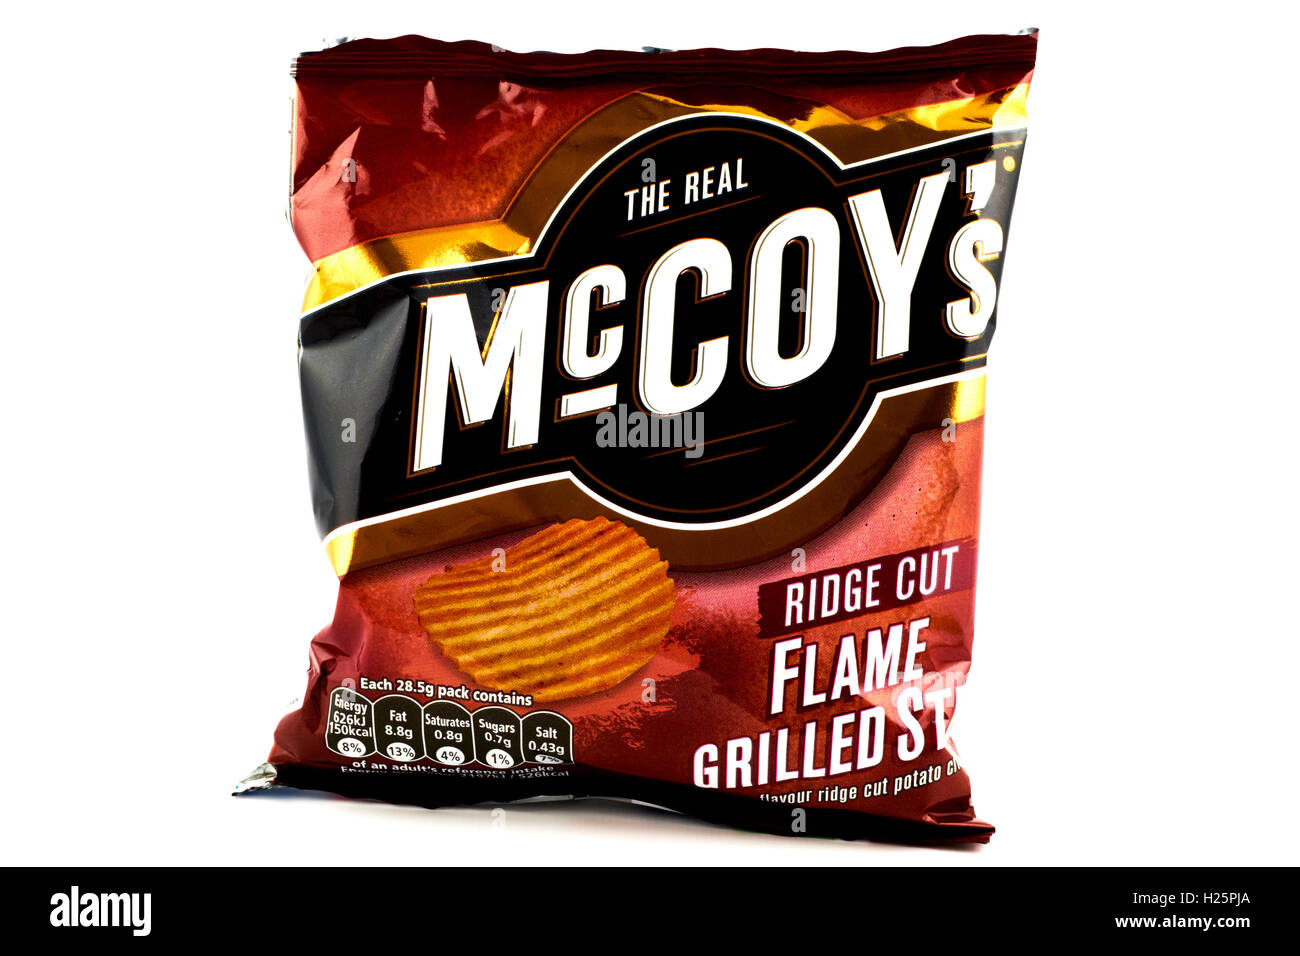 Packet Of McCoy's Flamed Grilled Steak Ridge Cut Crisps Stock Photo